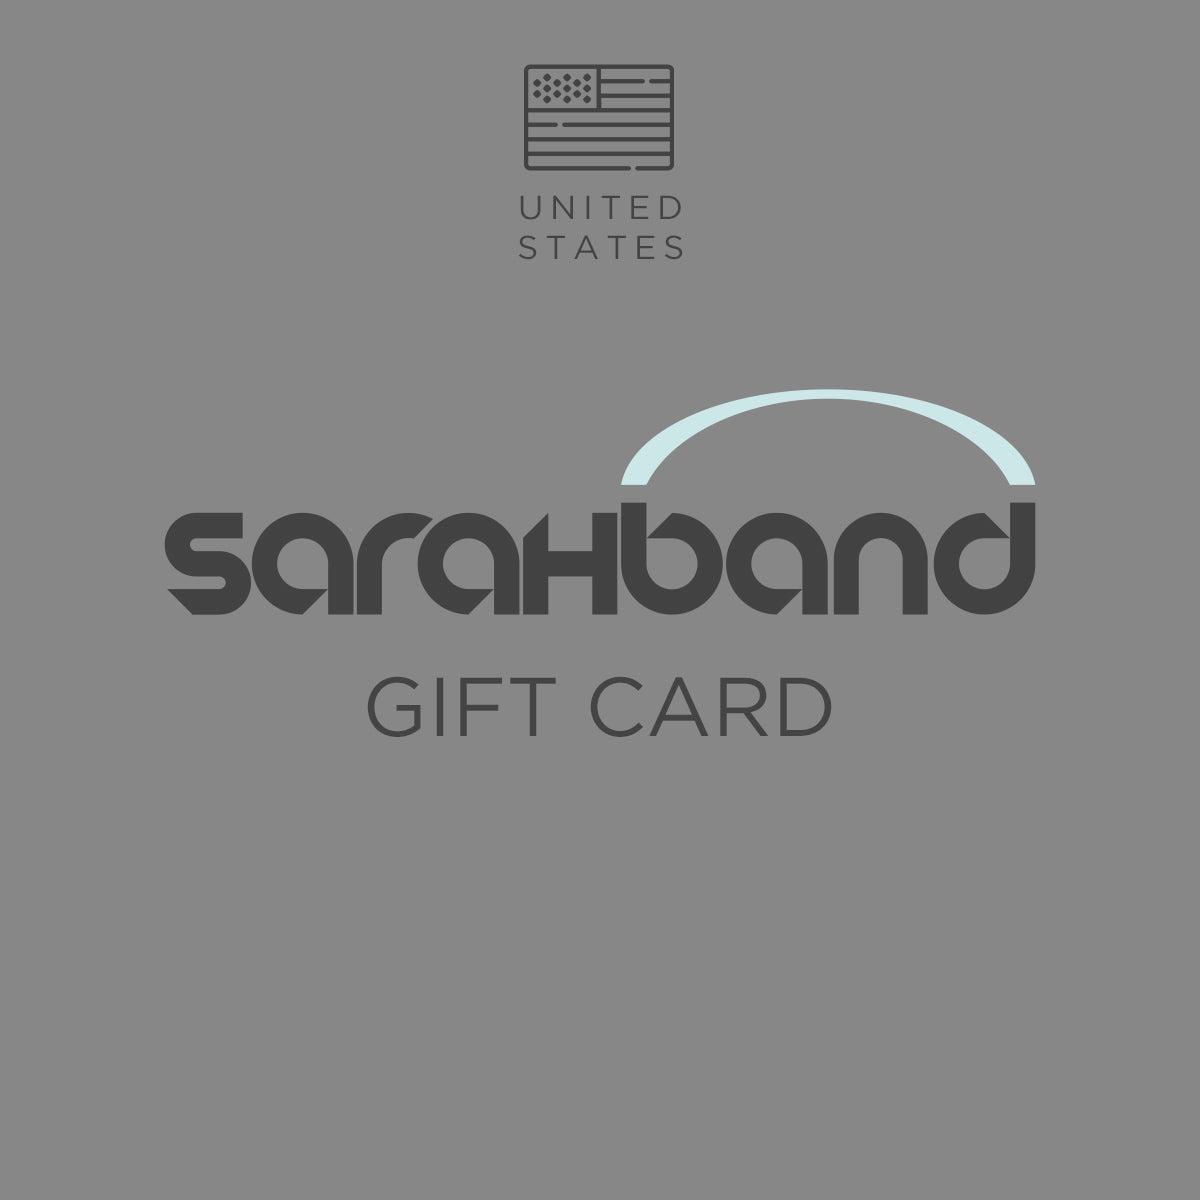 Sarahband Git Card - United States